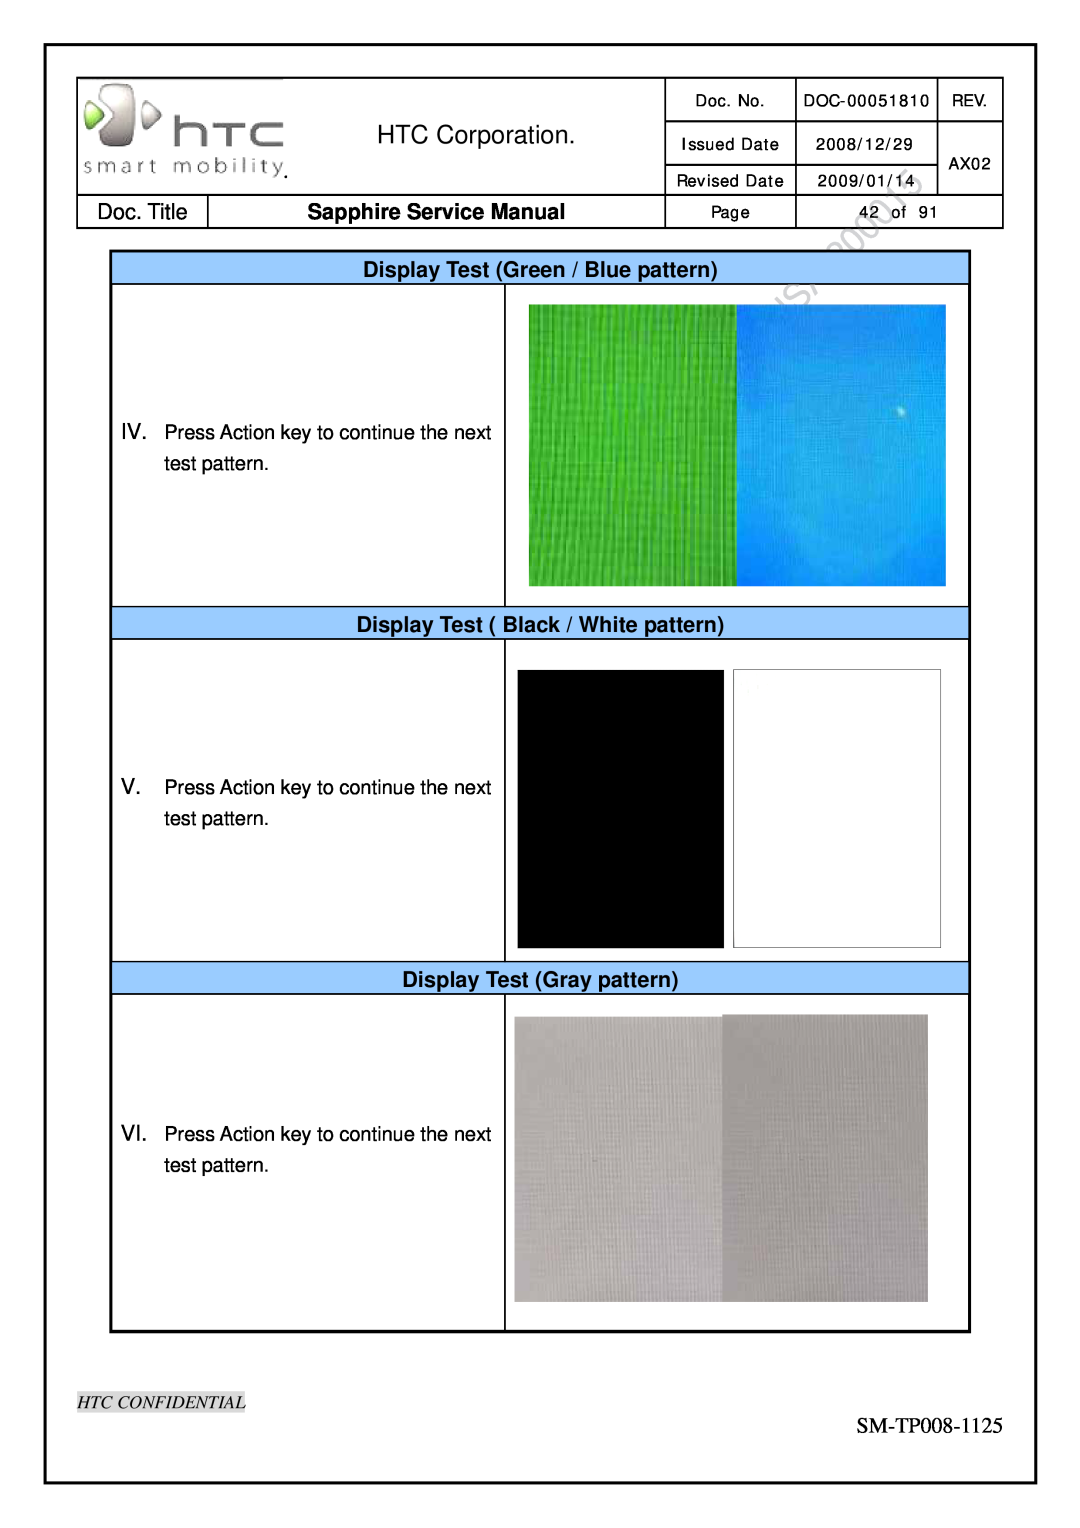 HTC SM-TP008-1125 Display Test Green / Blue pattern, Display Test Black / White pattern, Display Test Gray pattern, 42 of 